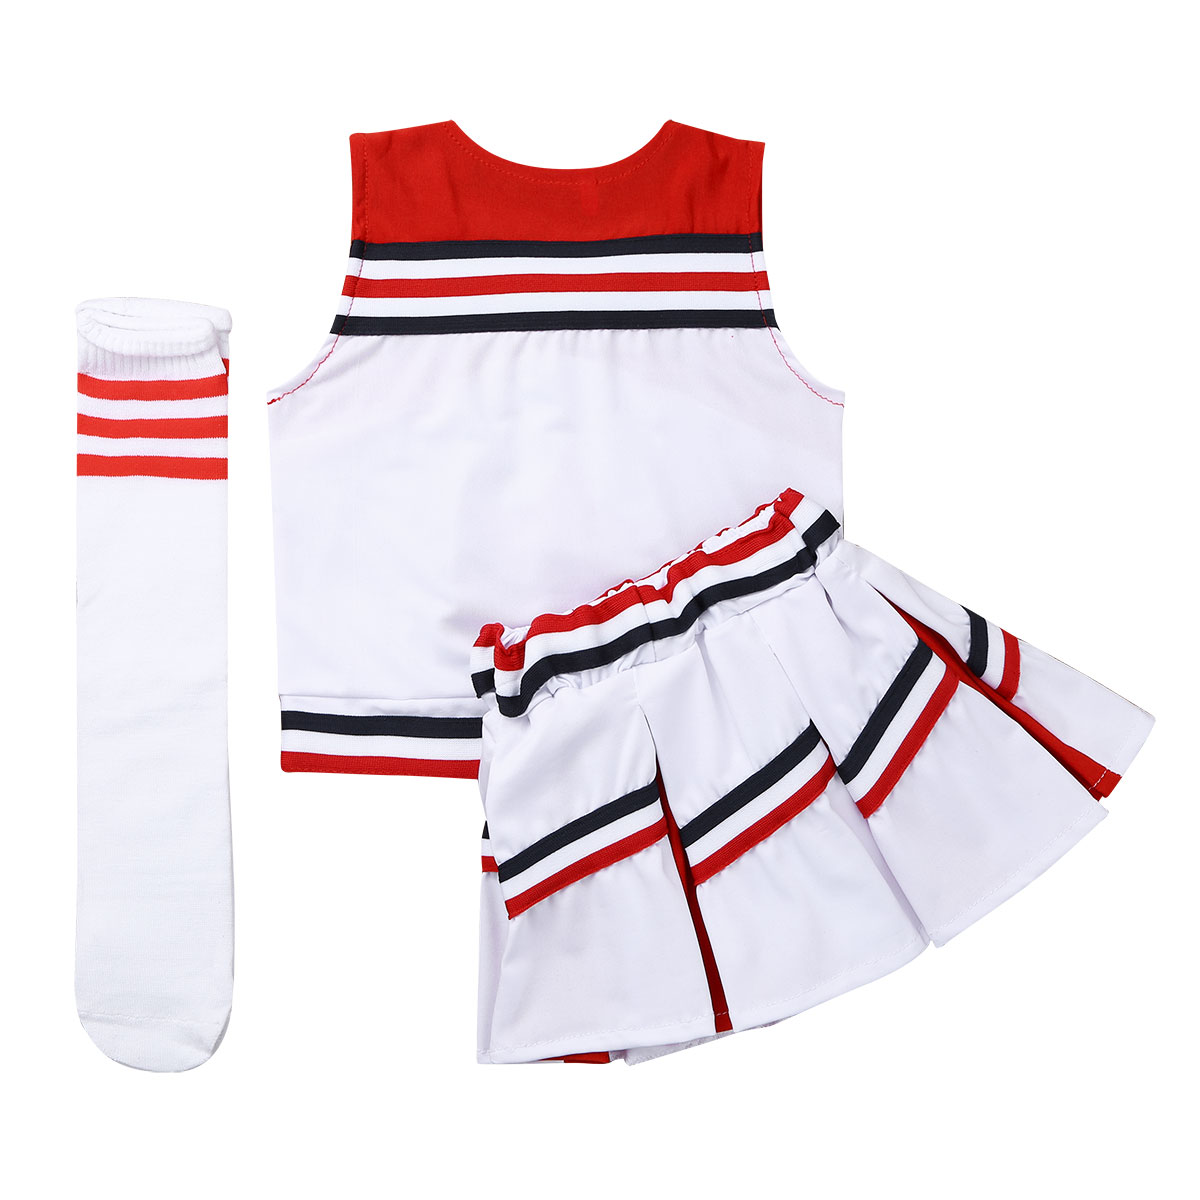 Pom Poms Sizes 4-14 Ladies Cheerleader Fancy Dress Costume